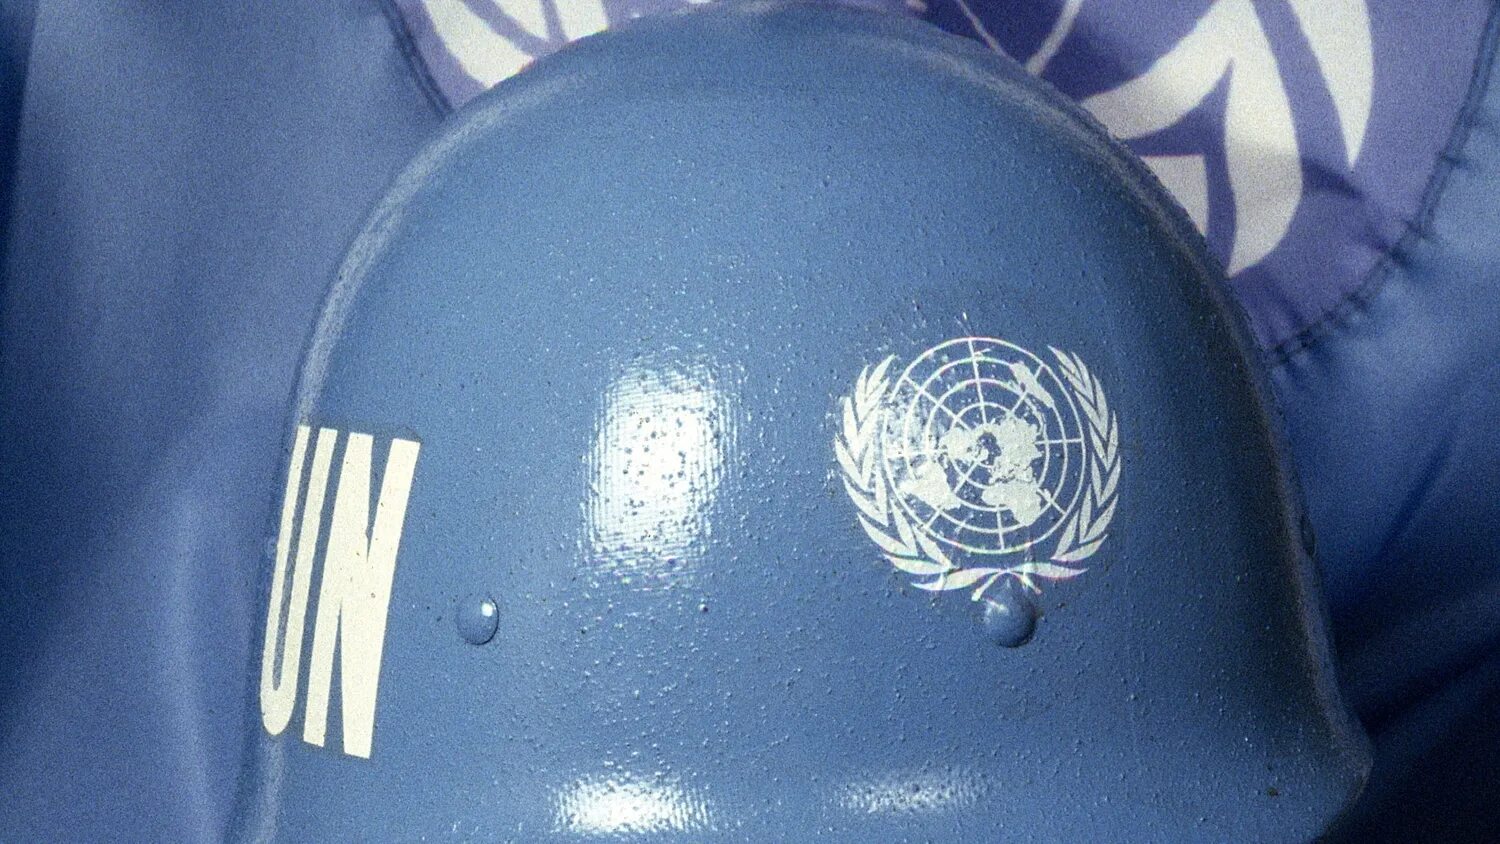 Каска Миротворца ООН. Шлем миротворческие силы ООН. Голубые каски. Шлем Миротворца. Голубой оон